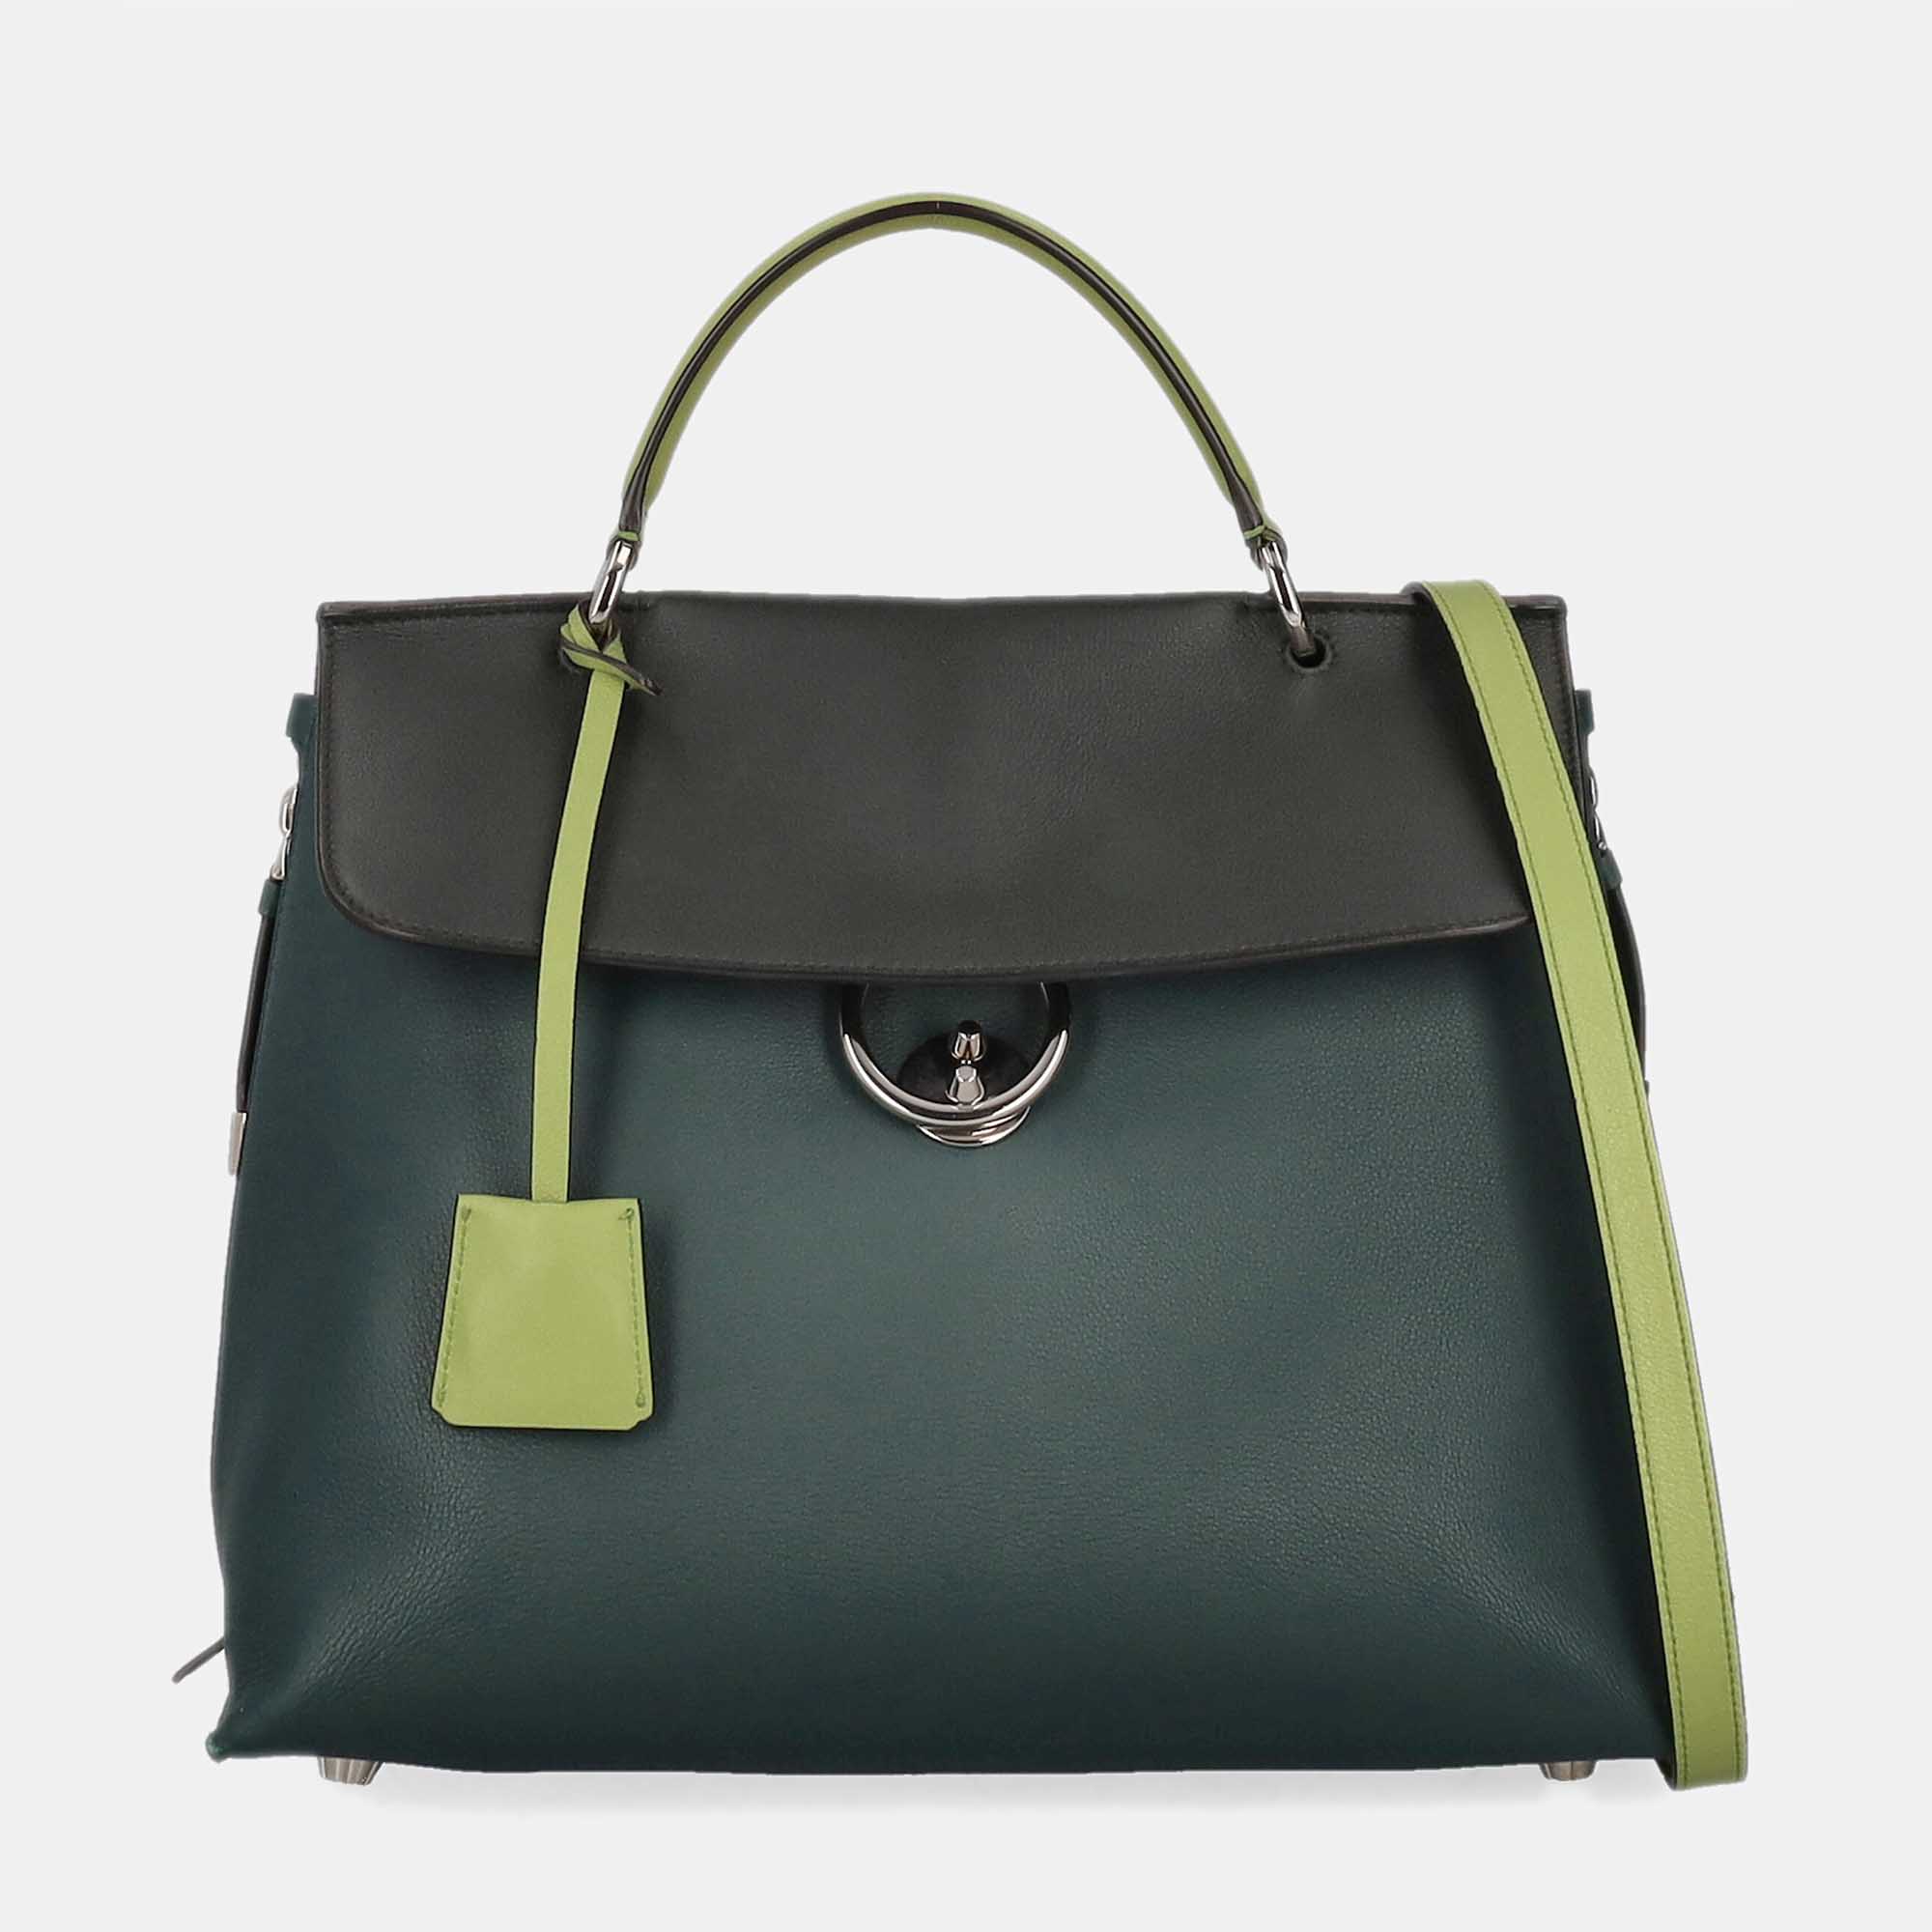 Salvatore Ferragamo  Women's Leather Shoulder Bag - Green - One Size